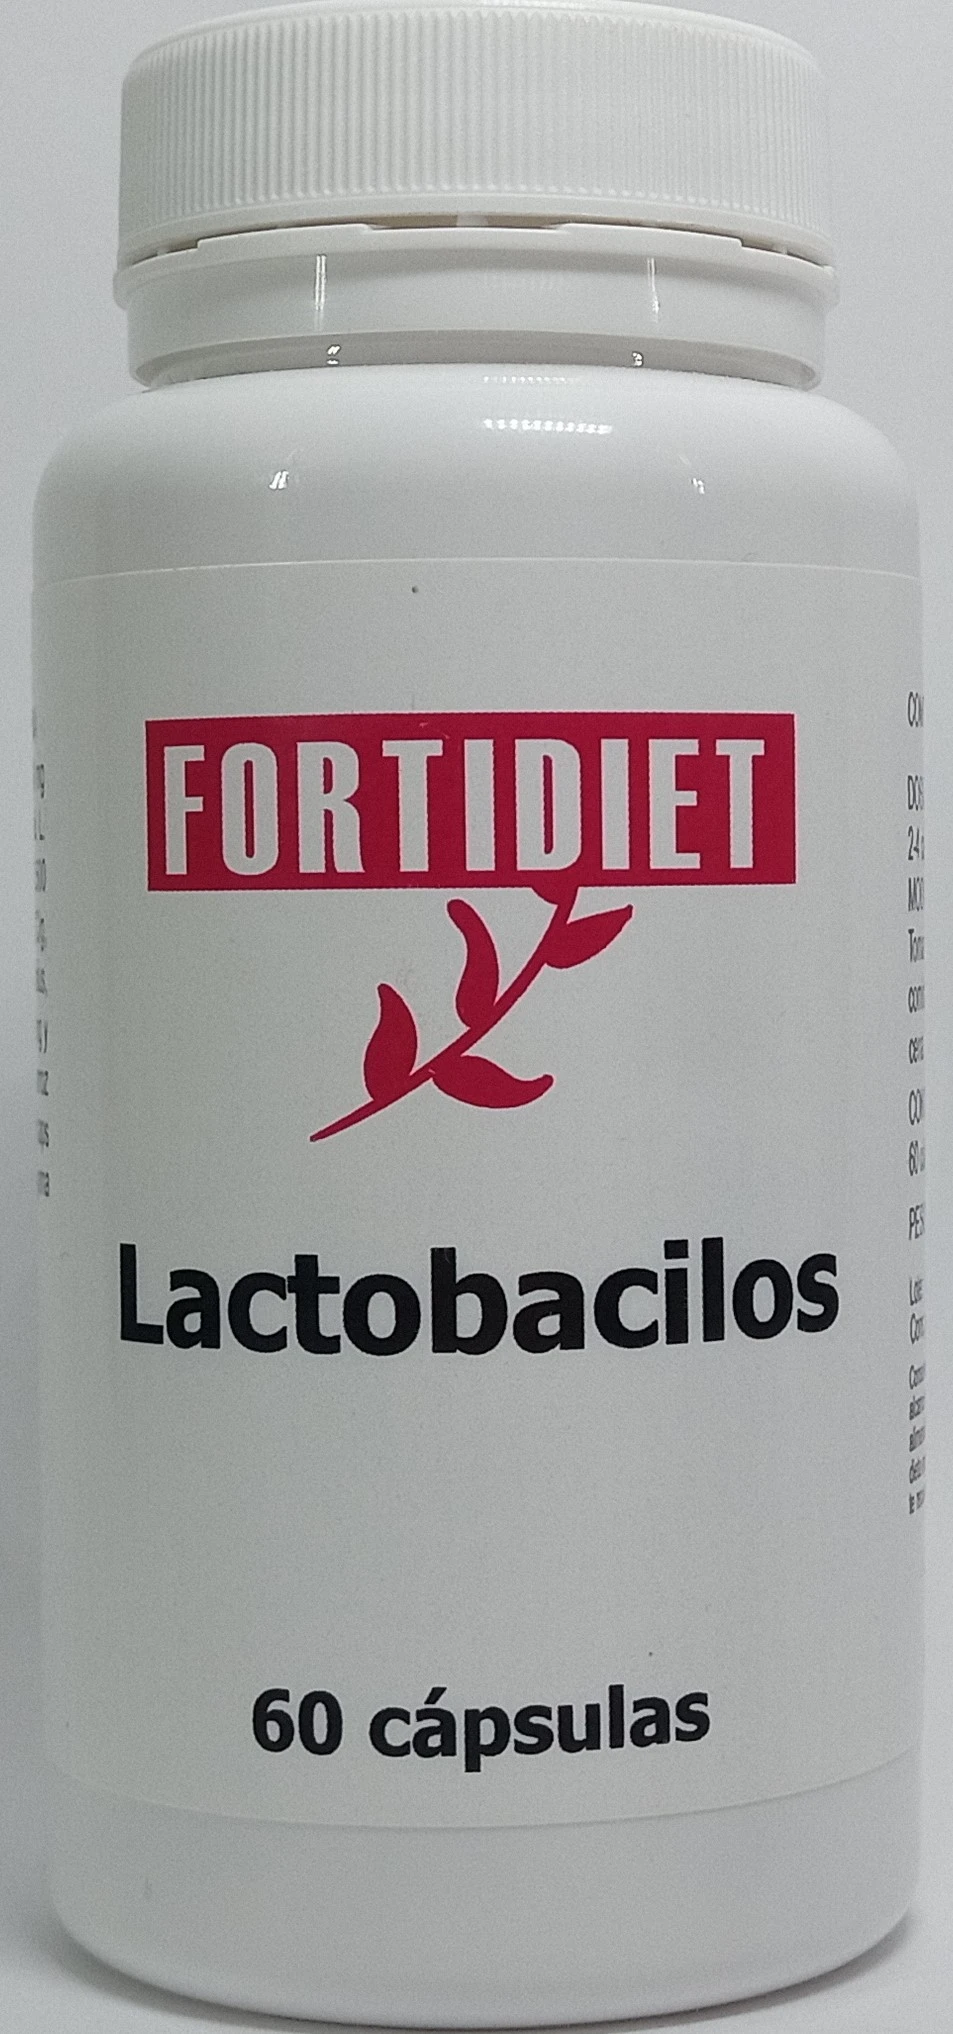 Fortidiet Lactobacilos 60 caps.